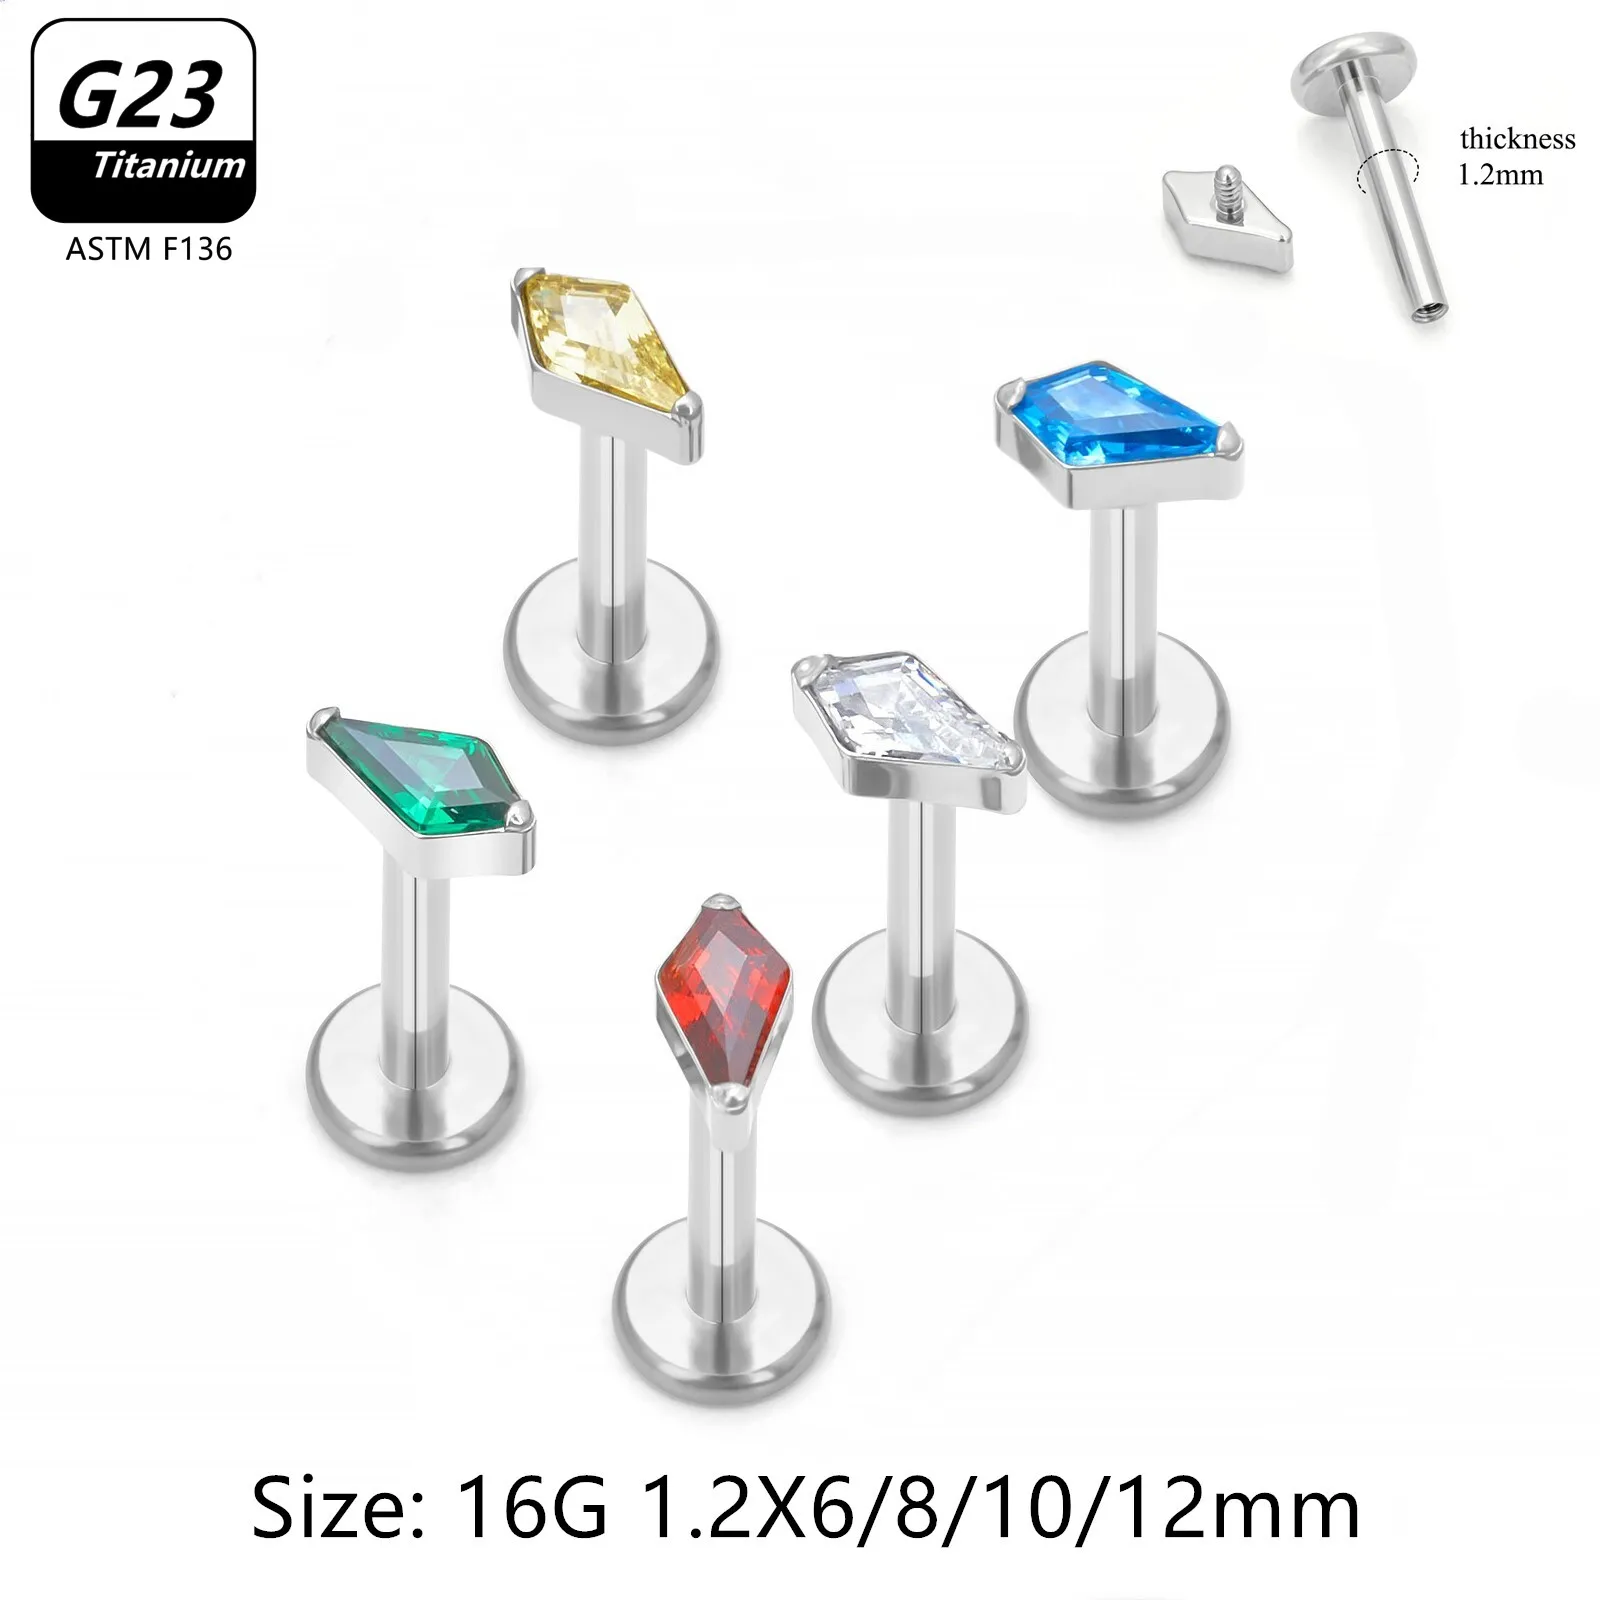 

16g ASTM F136 Titanium Ear Cartilage Tragus Helix Daith Piercing Body Jewelry Cubic Zirconia Stud Earring Conch Lobe Labret Lip